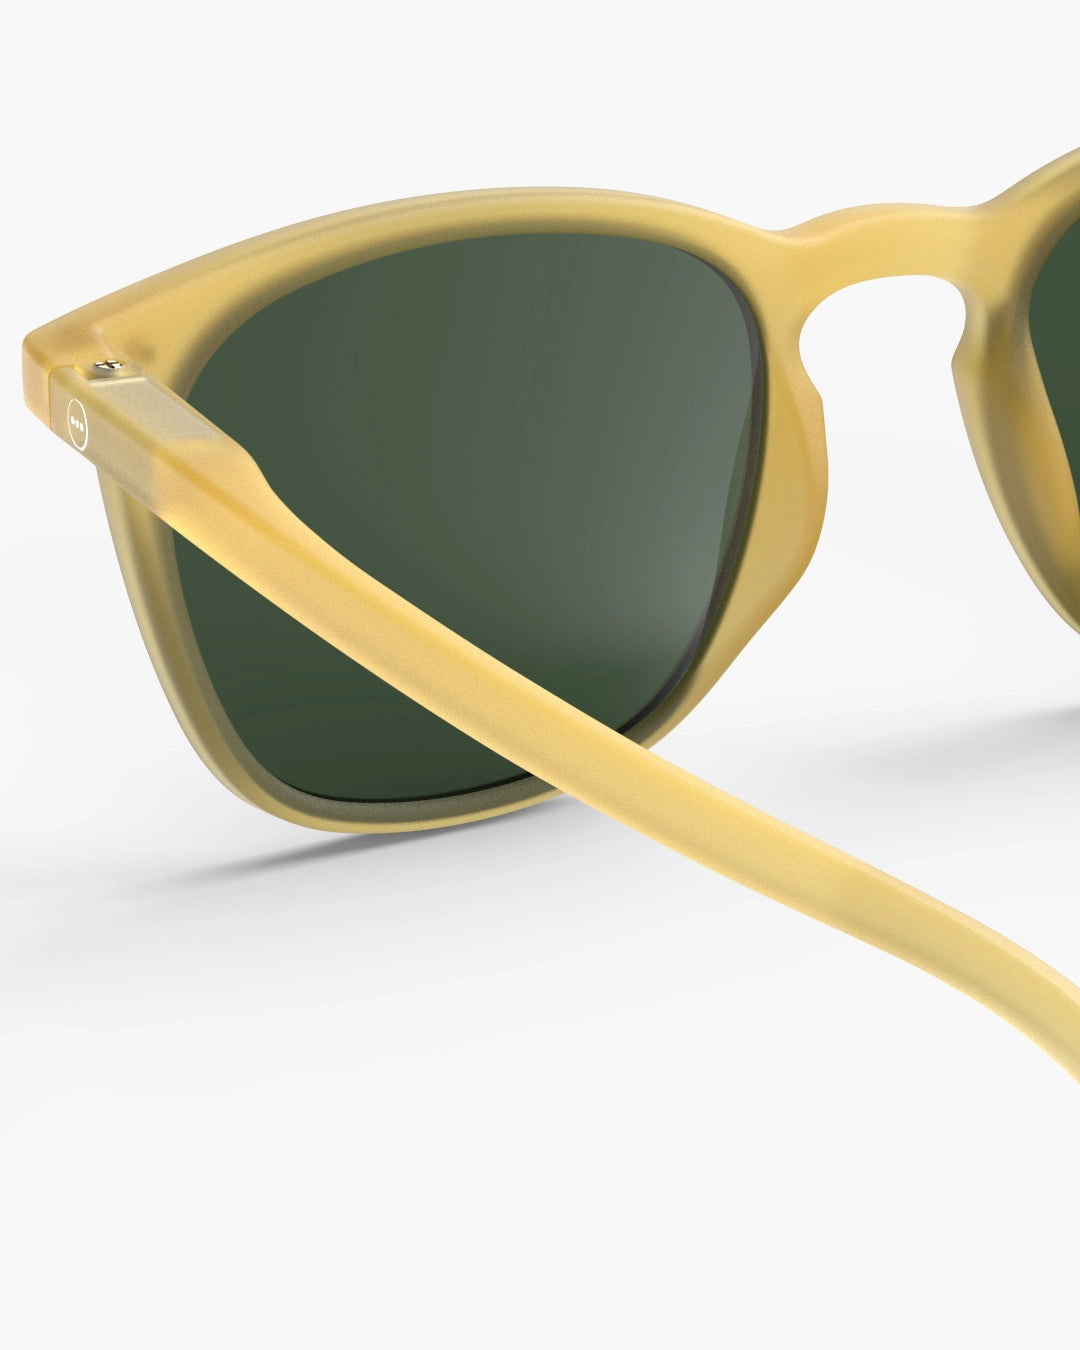 Sunglasses ‘Yellow Honey' #E